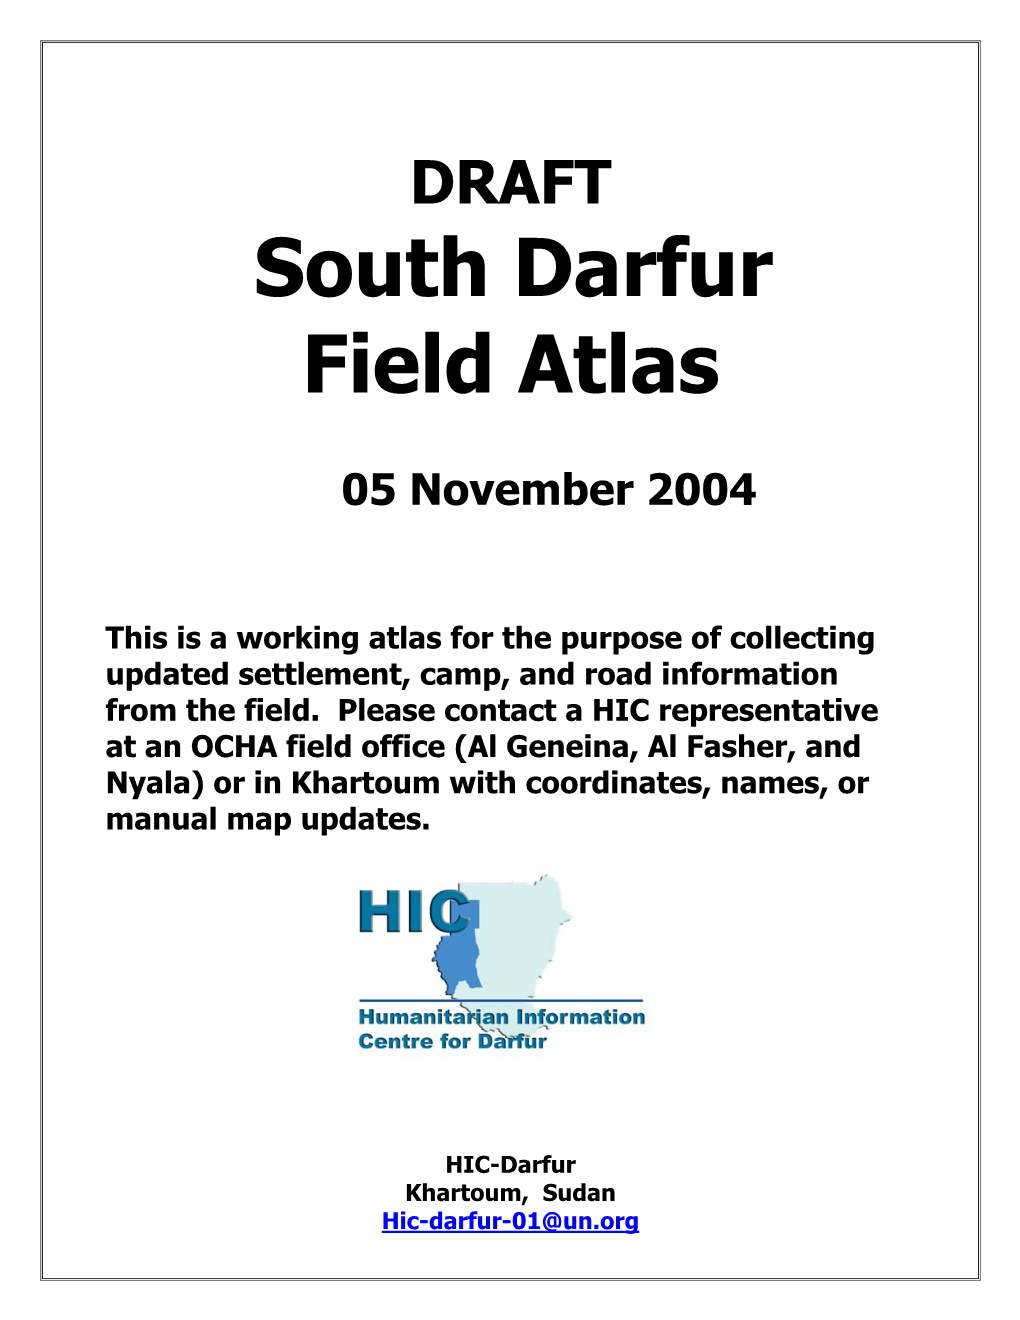 South Darfur Field Atlas